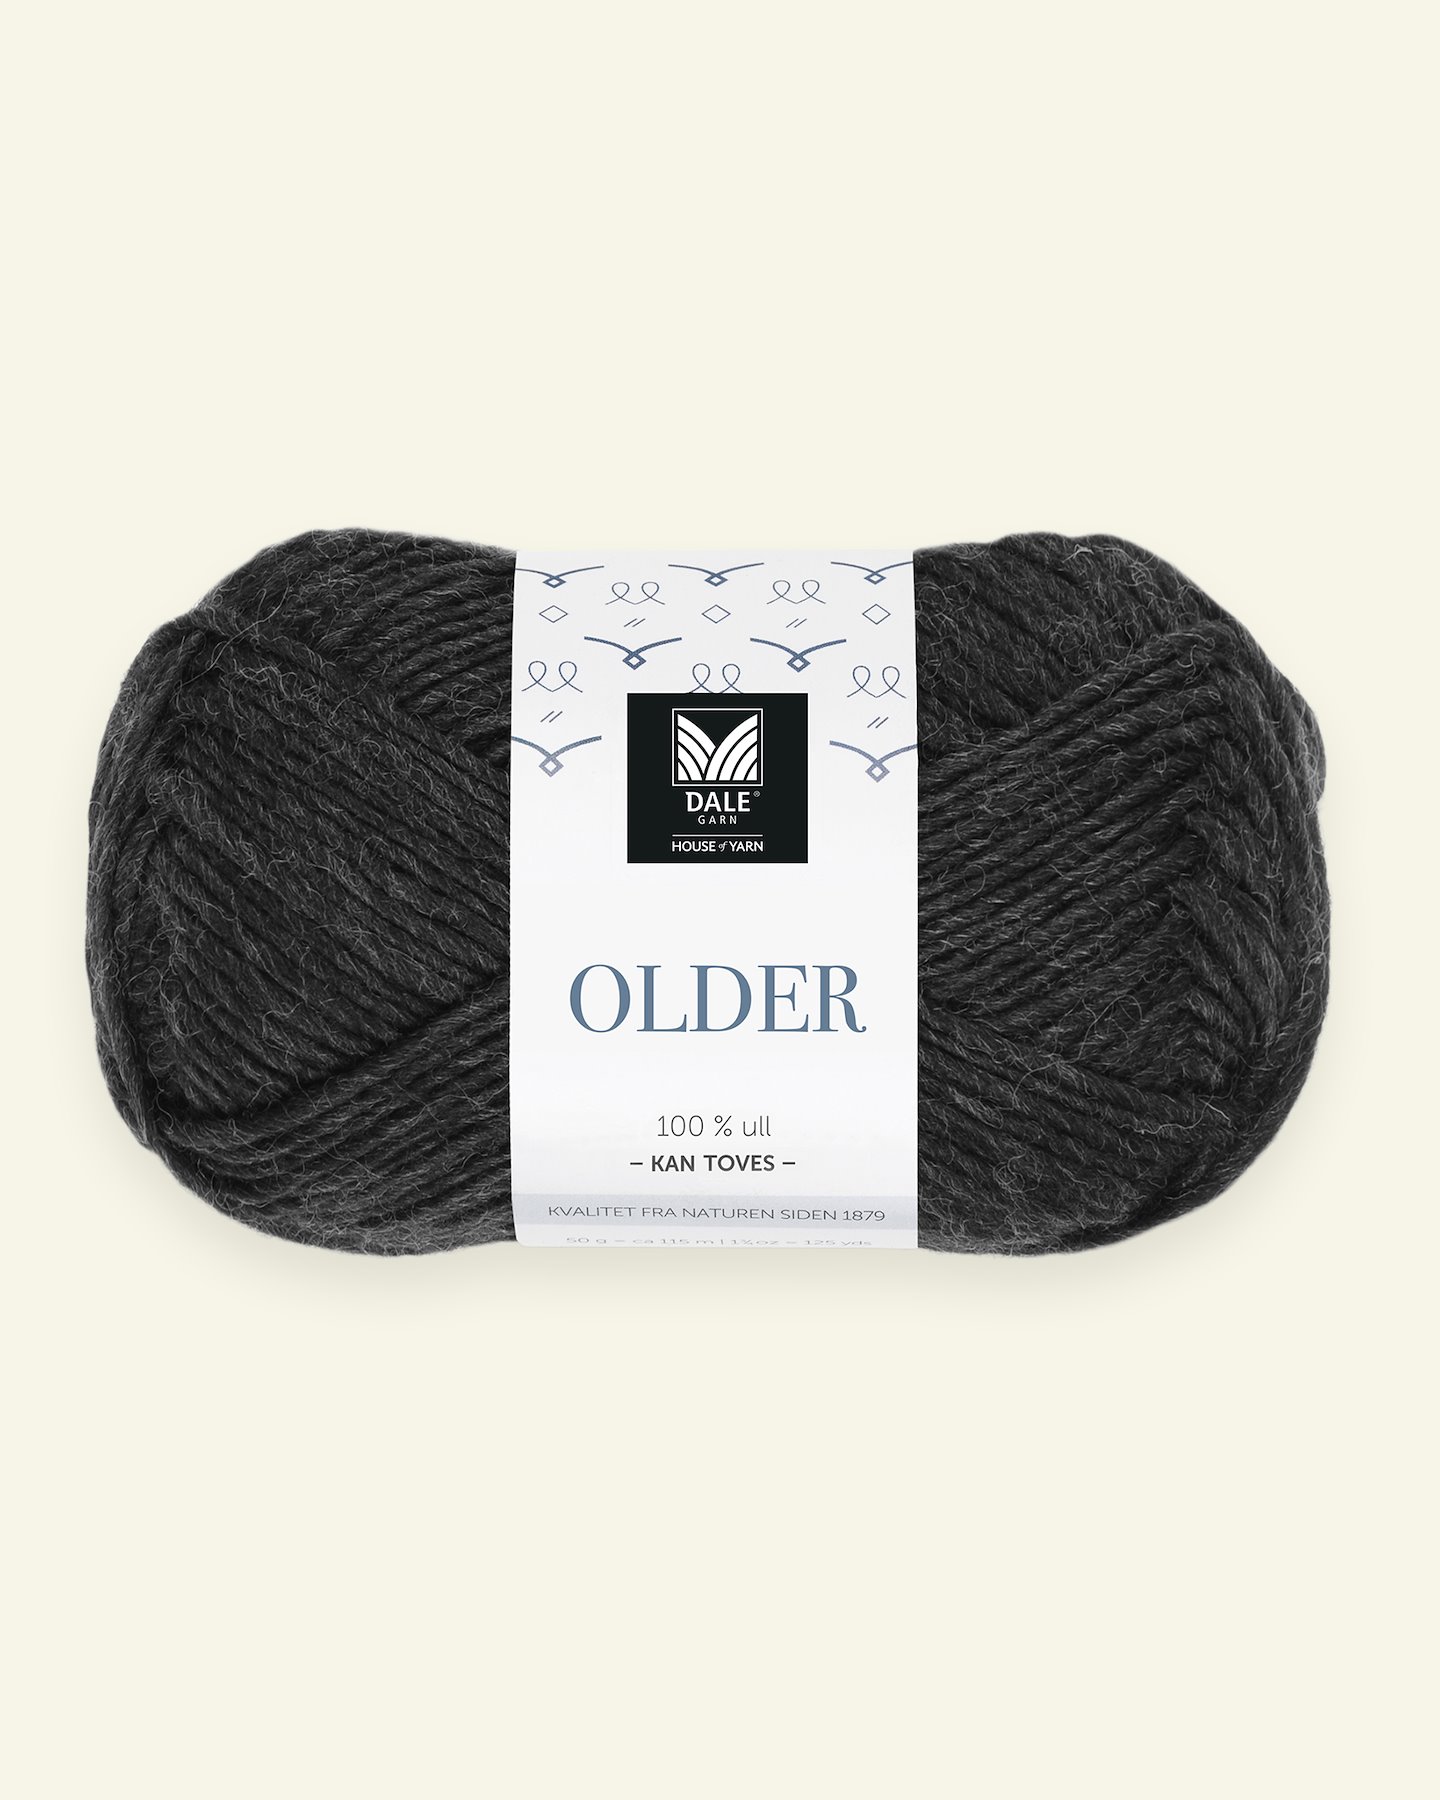 Dale Garn, 100% wool yarn "Older", charcoal grey 90000476_pack